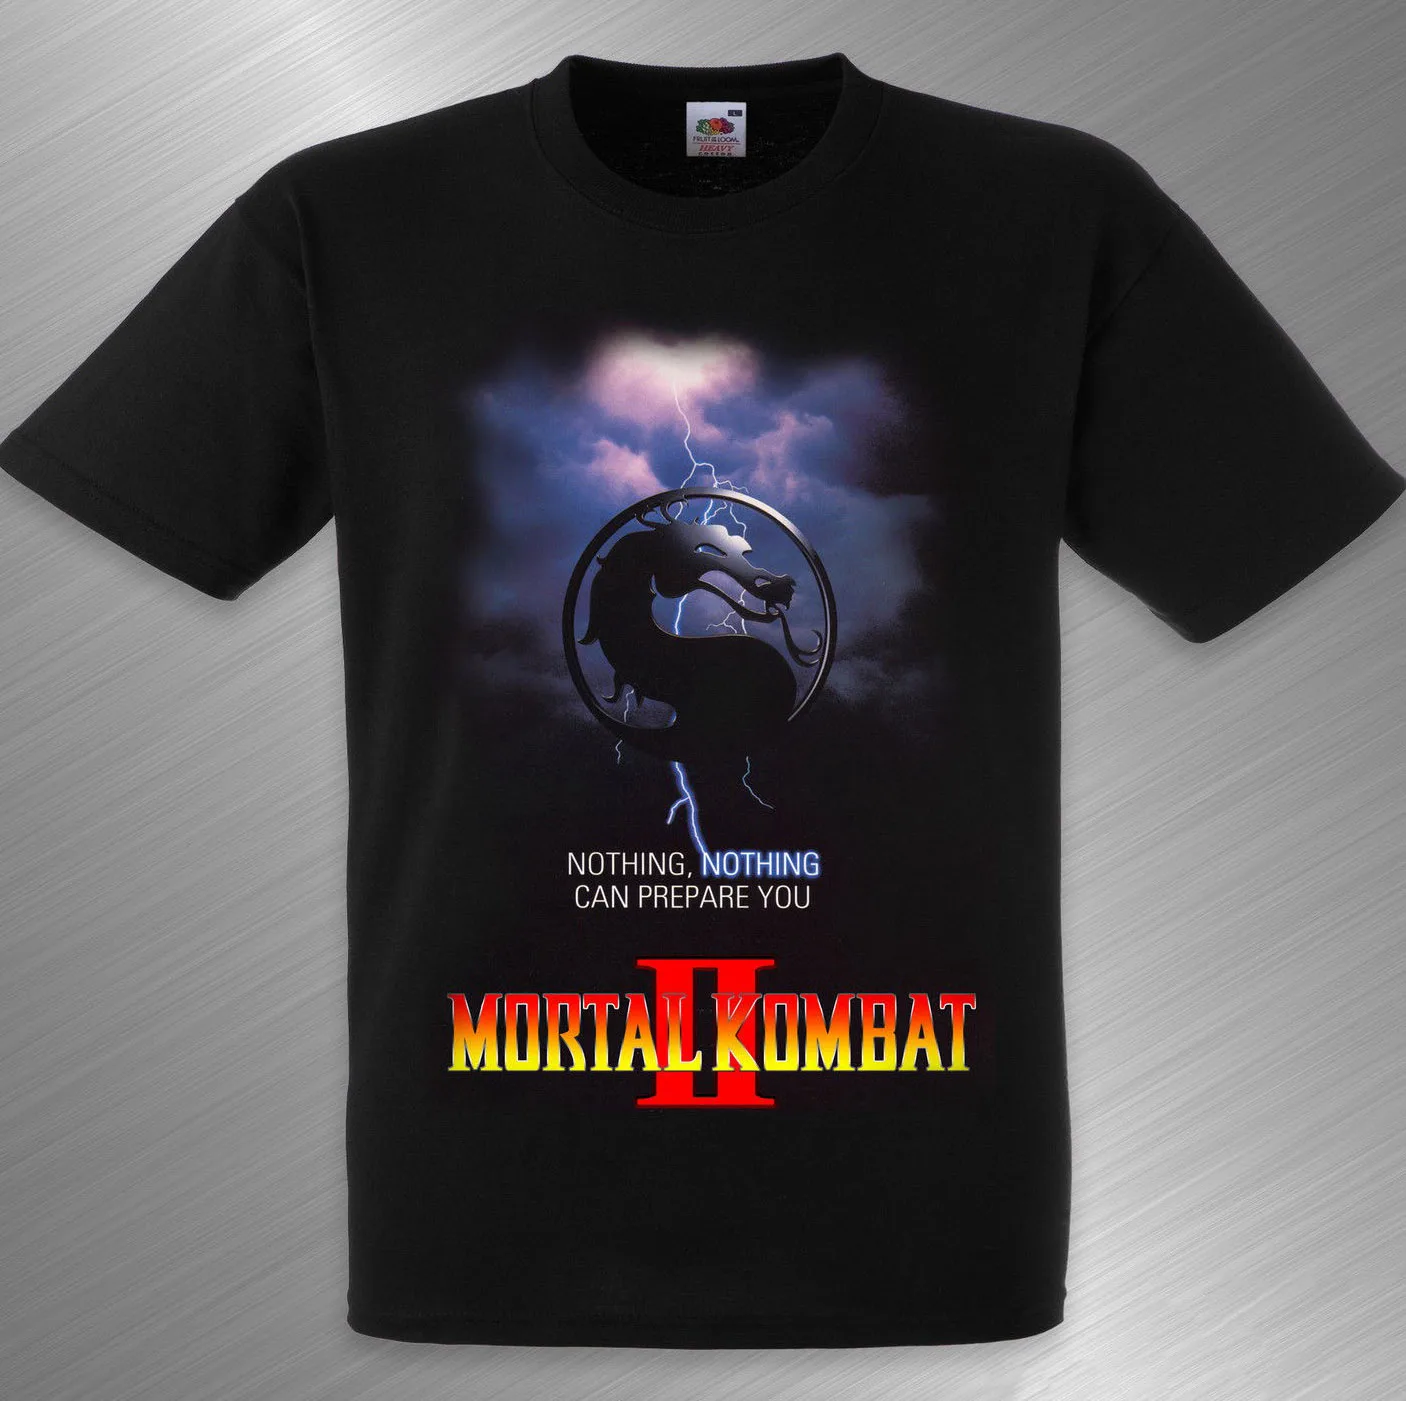 mortal kombat 2 shirt